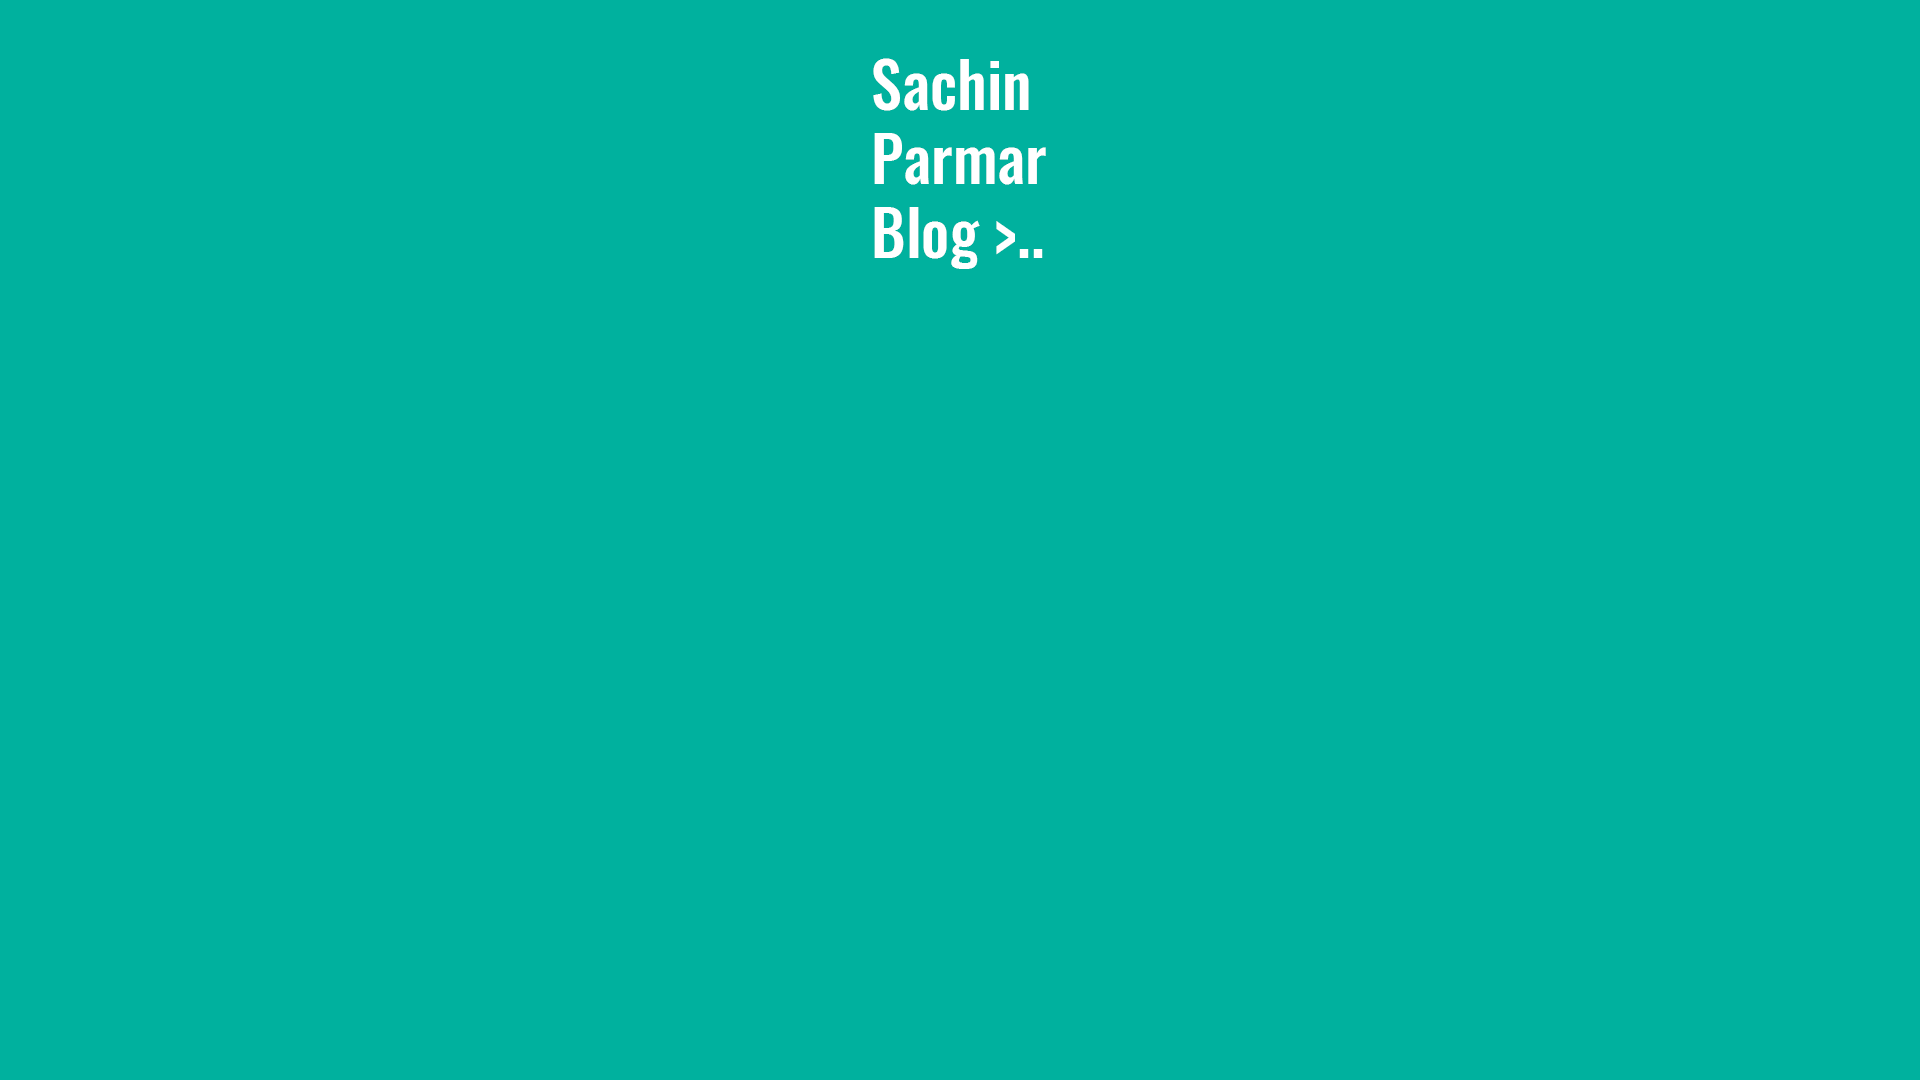 Changing the Login Screen Wallpaper on Mac OS X. Sachin Parmar Blog